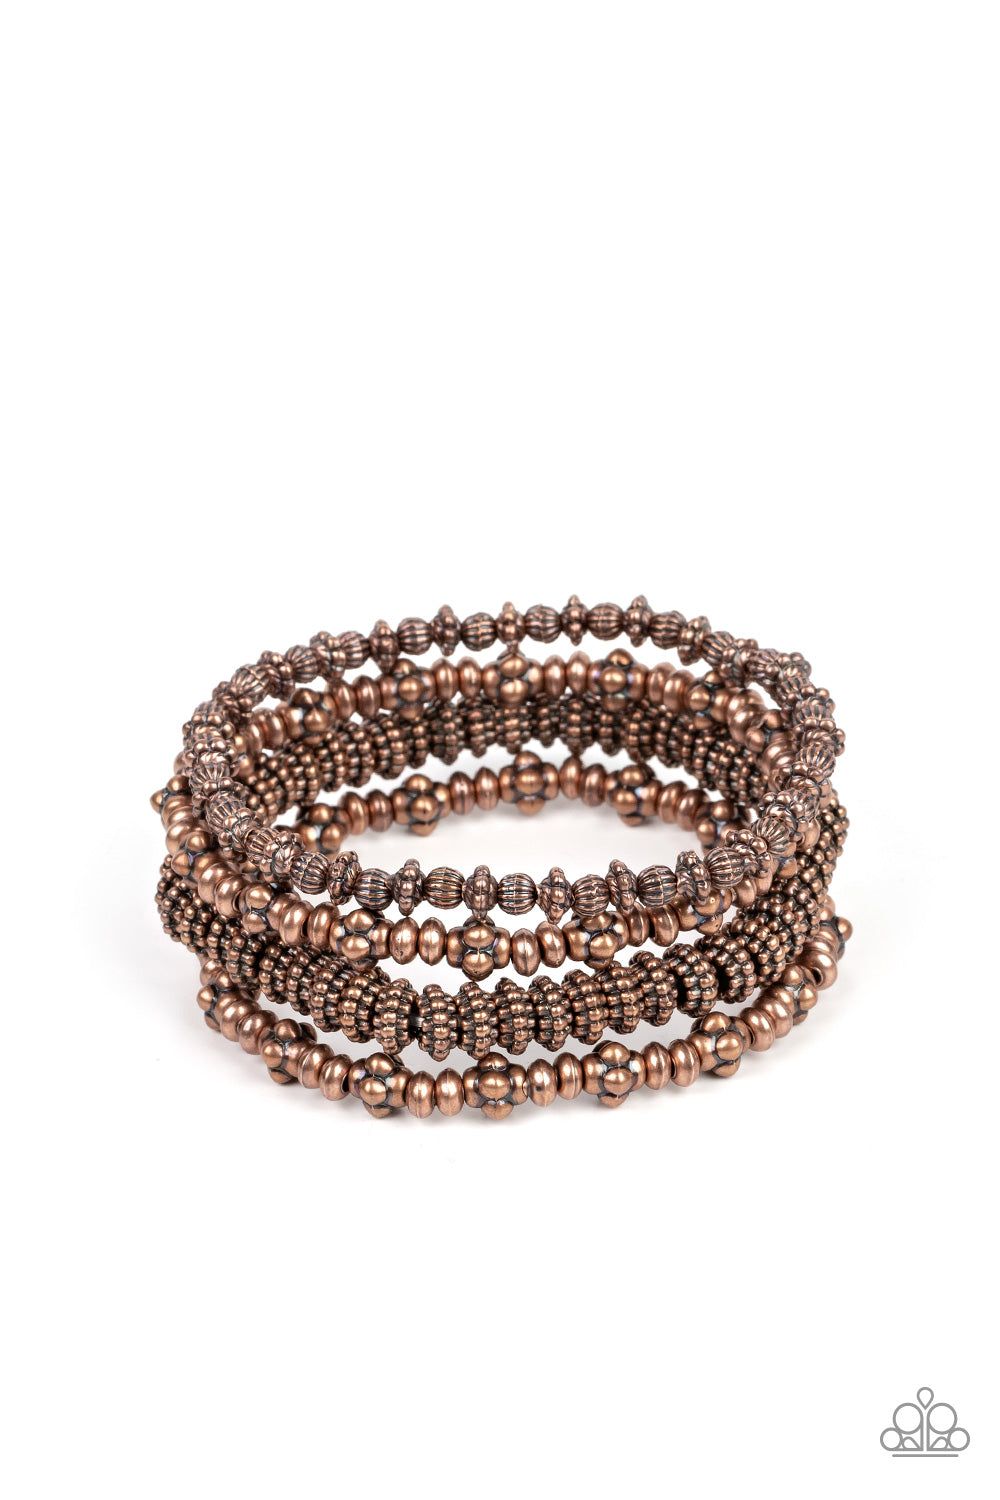 Paparazzi Bracelets - Country Charmer - Copper